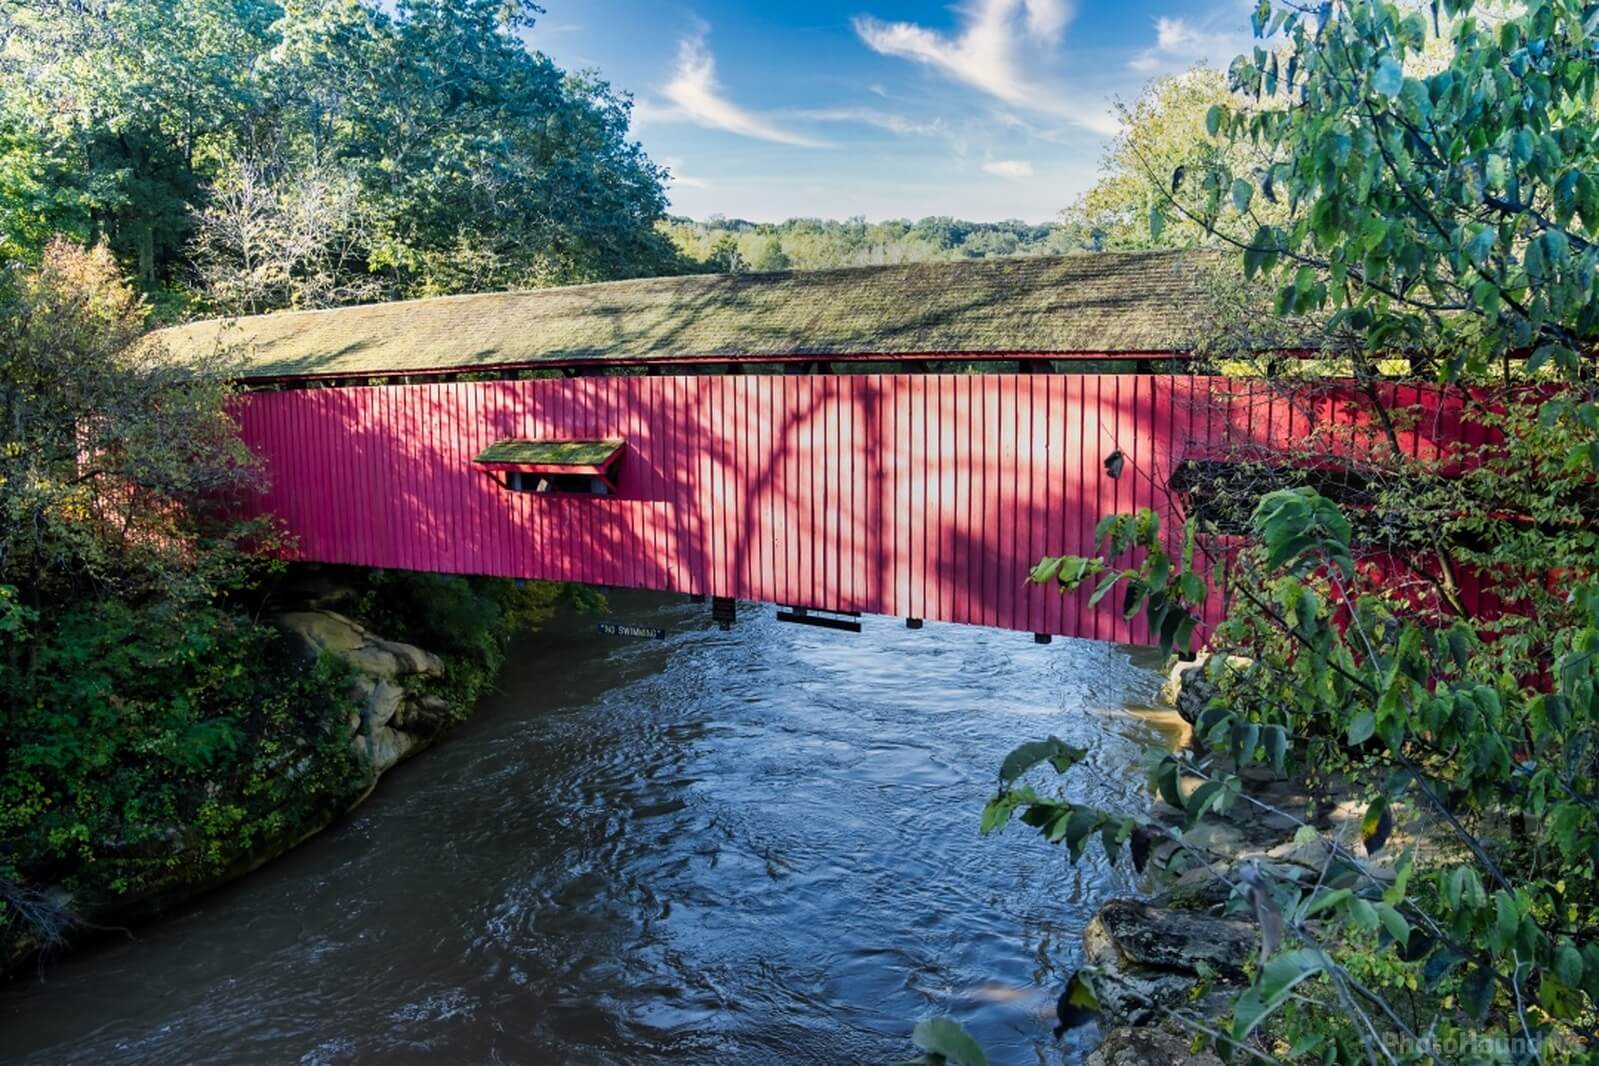 Image of Narrows Covered Bridge by Brad Barnes